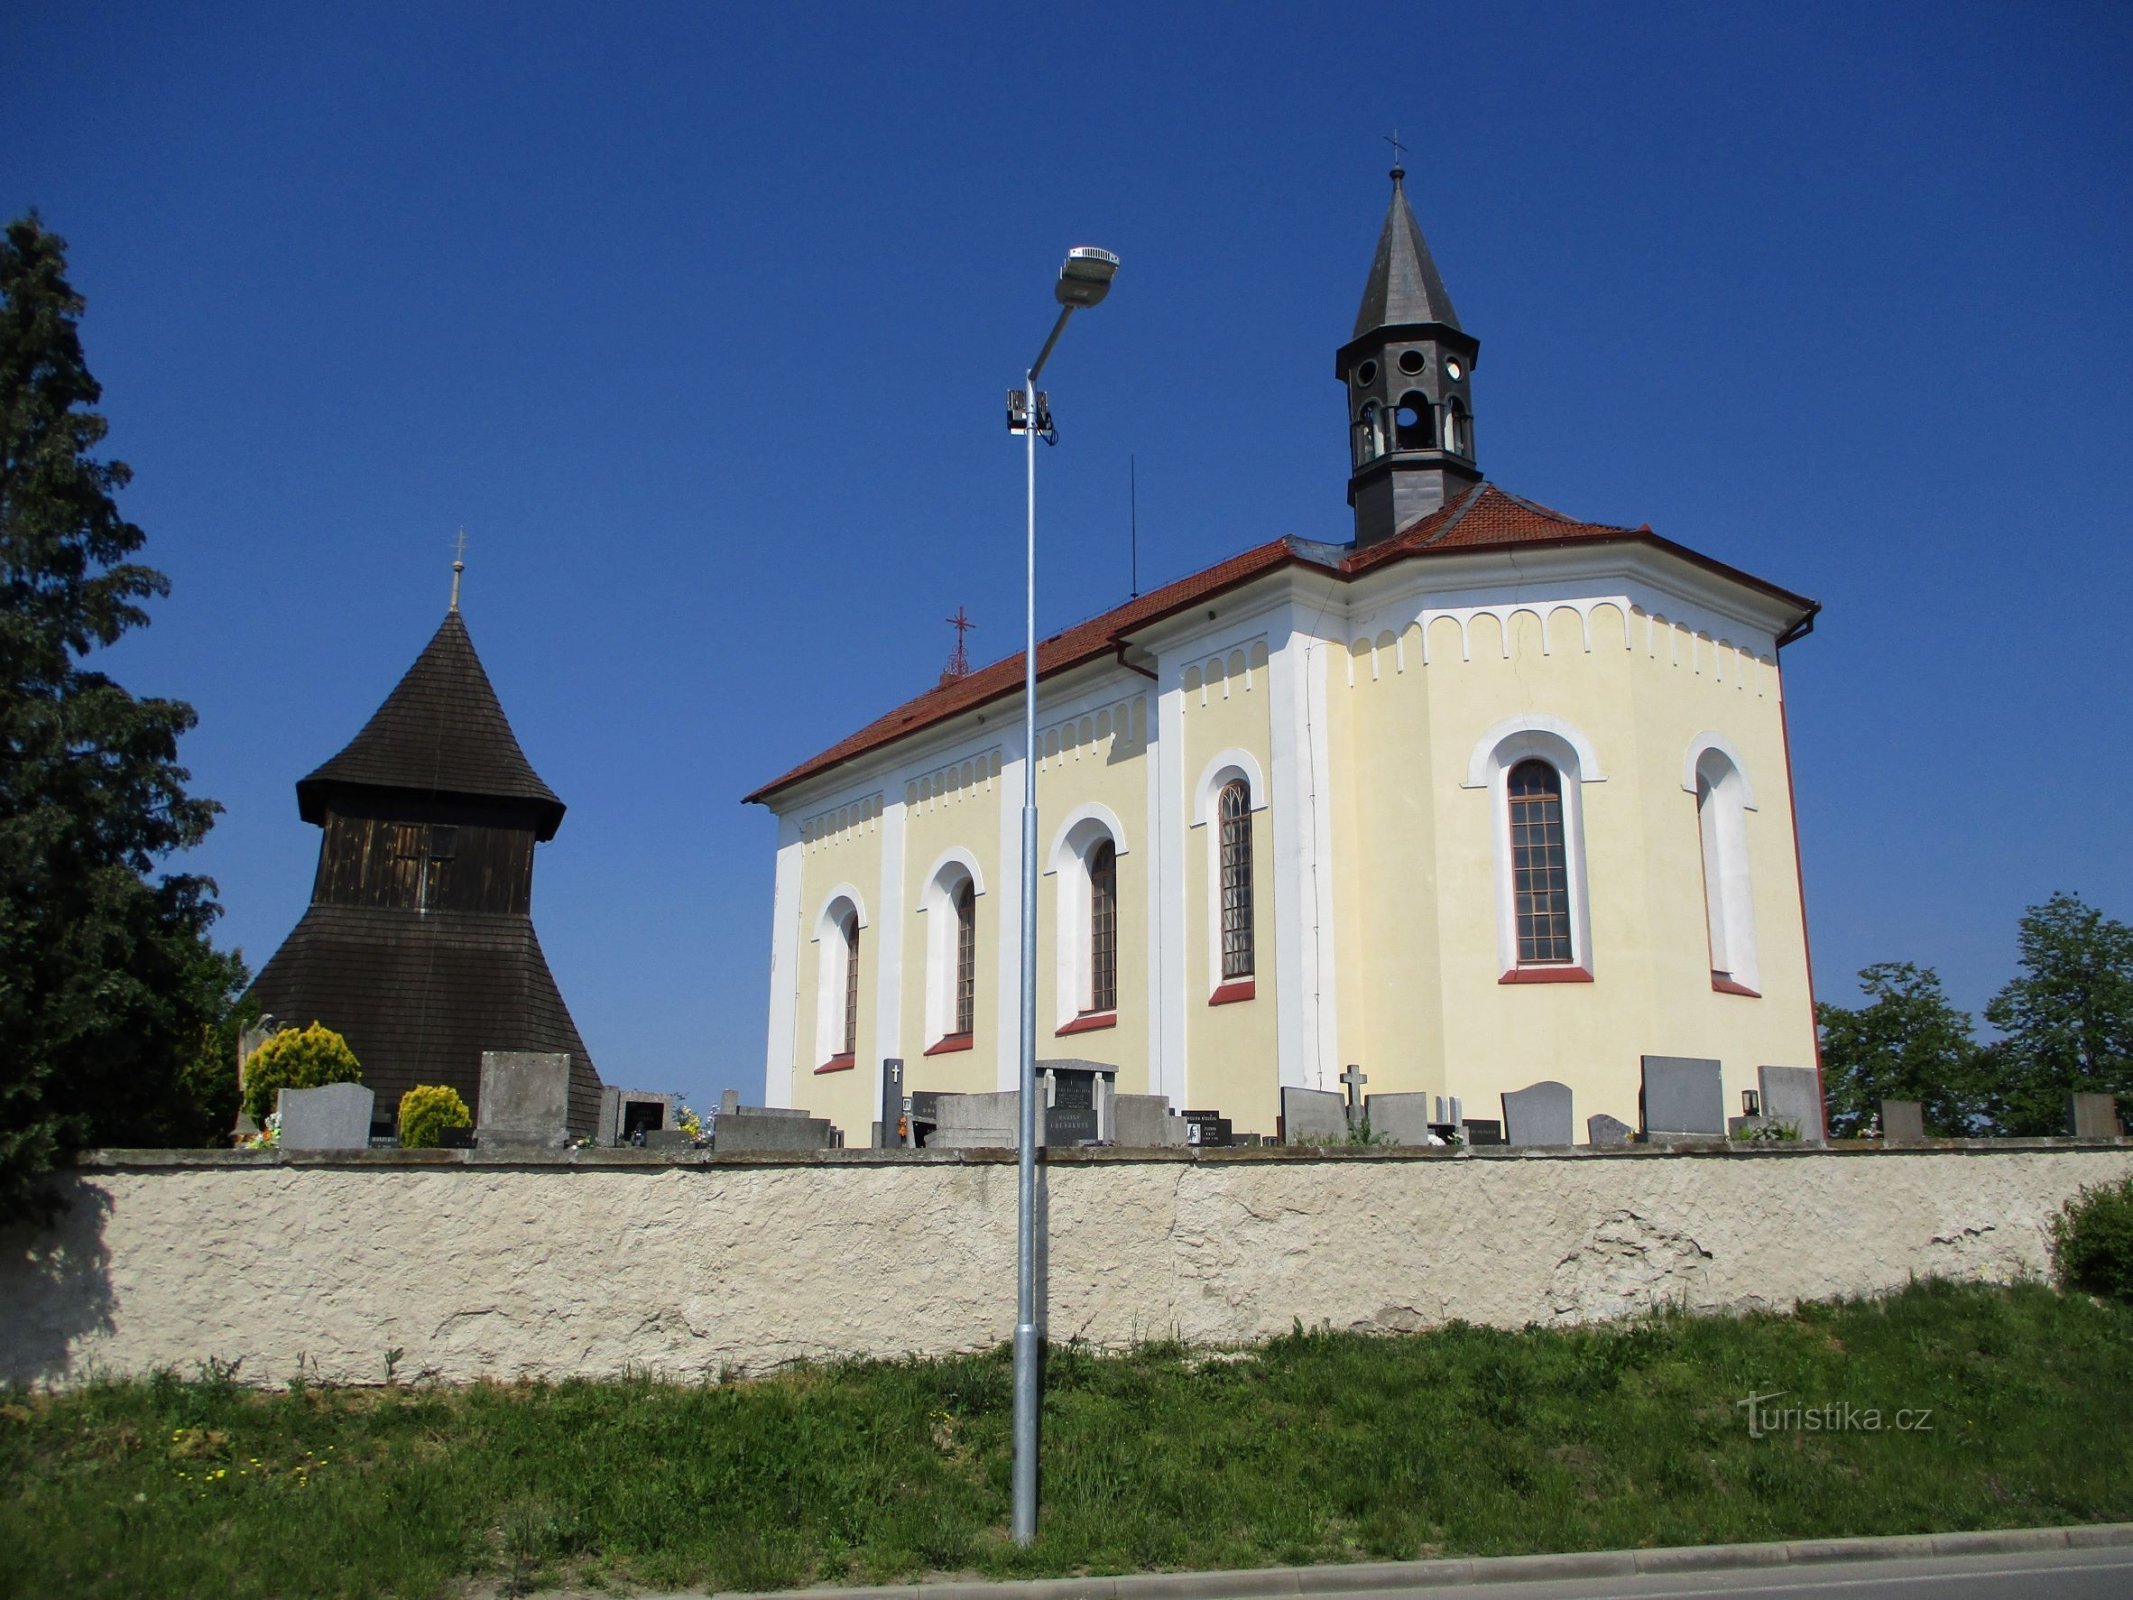 Turnul-clopotnita si biserica Sf. Wenceslas (Horní Ředice, 16.5.2020)